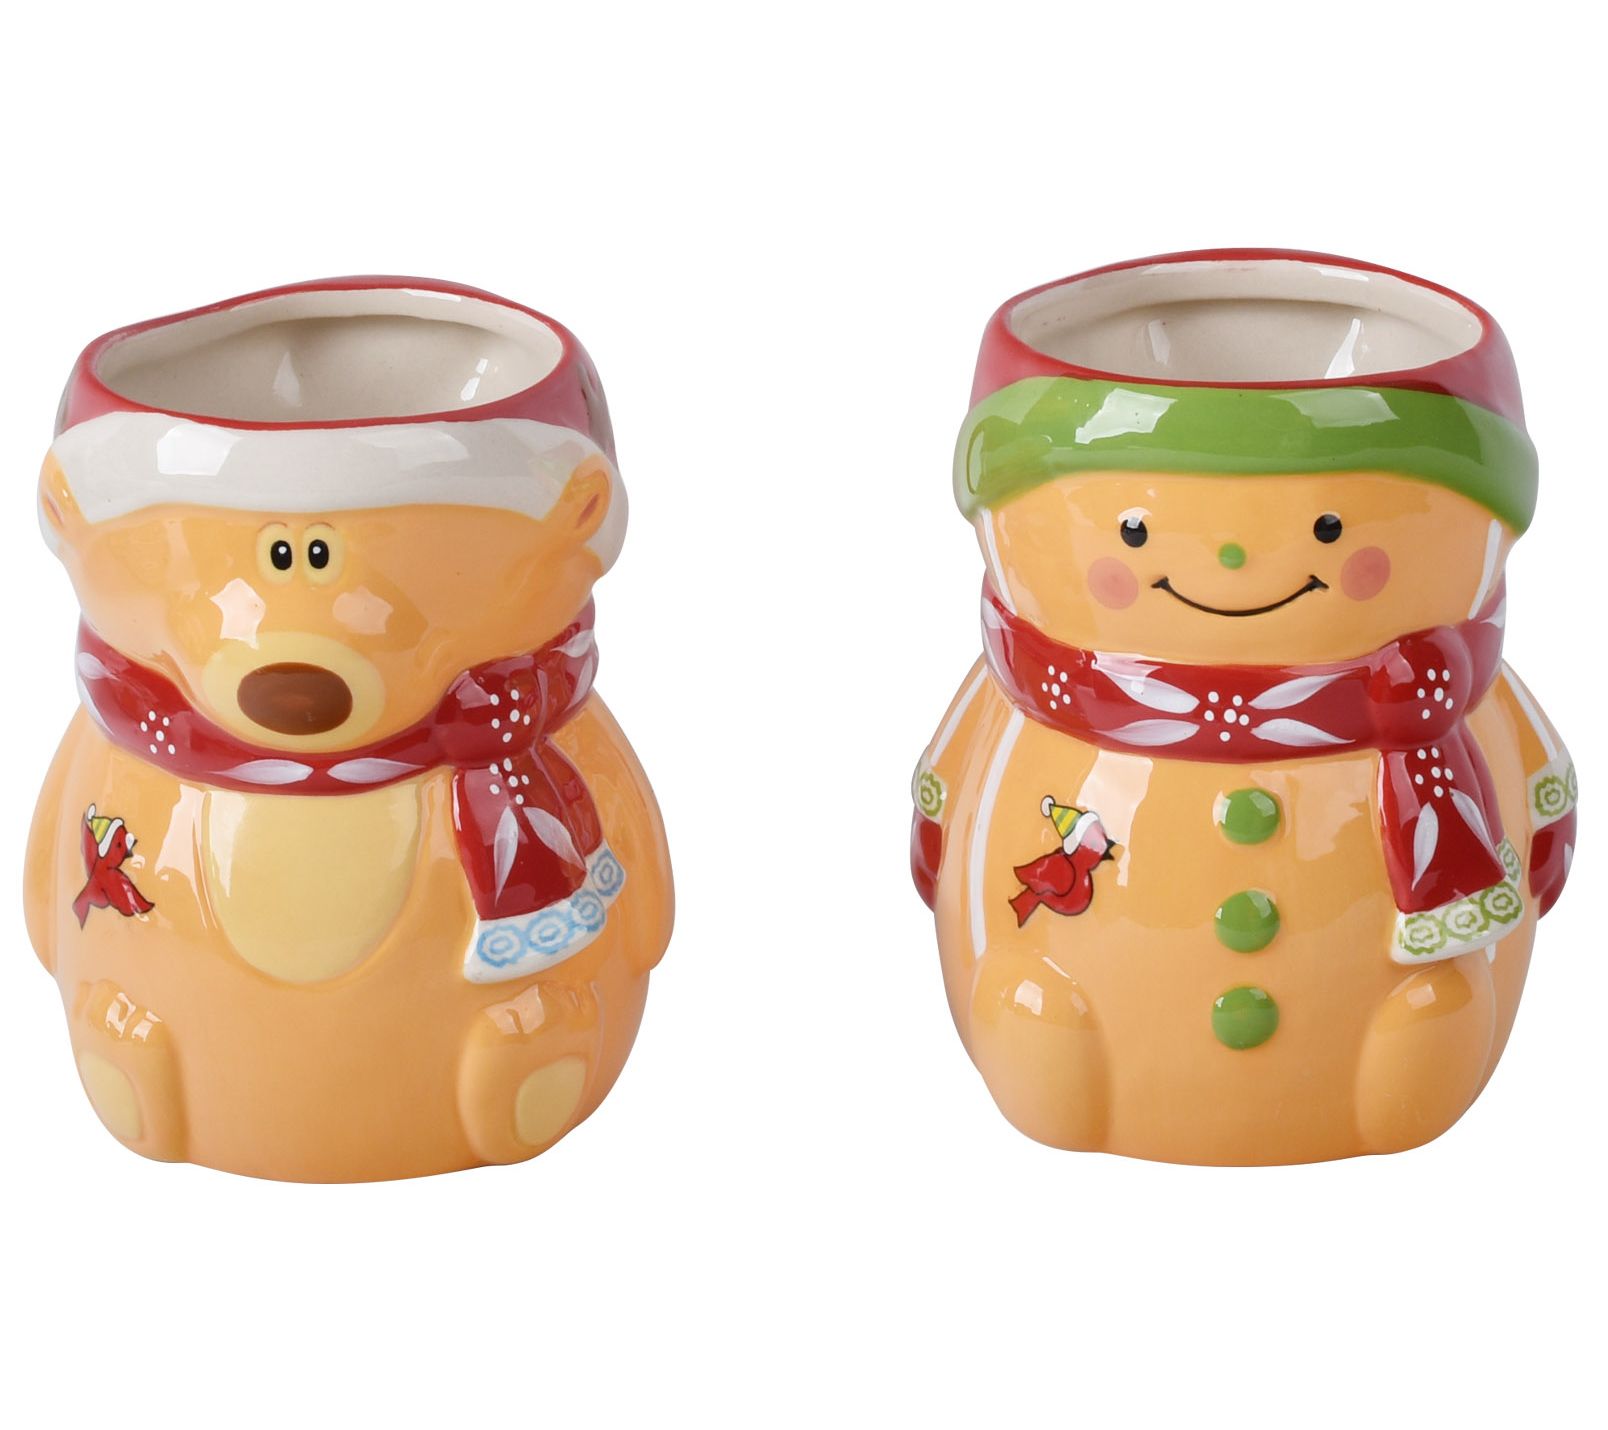 Holiday Reindeer Ceramic Mug & Slipper Socks Set